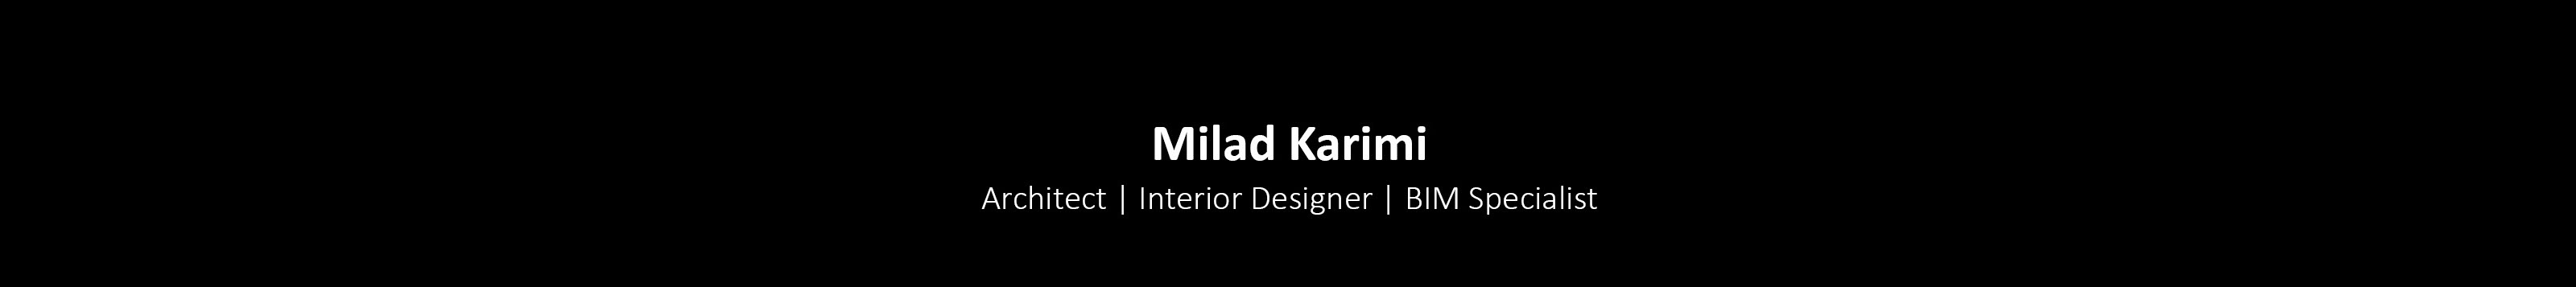 Banner de perfil de Milad Karimi